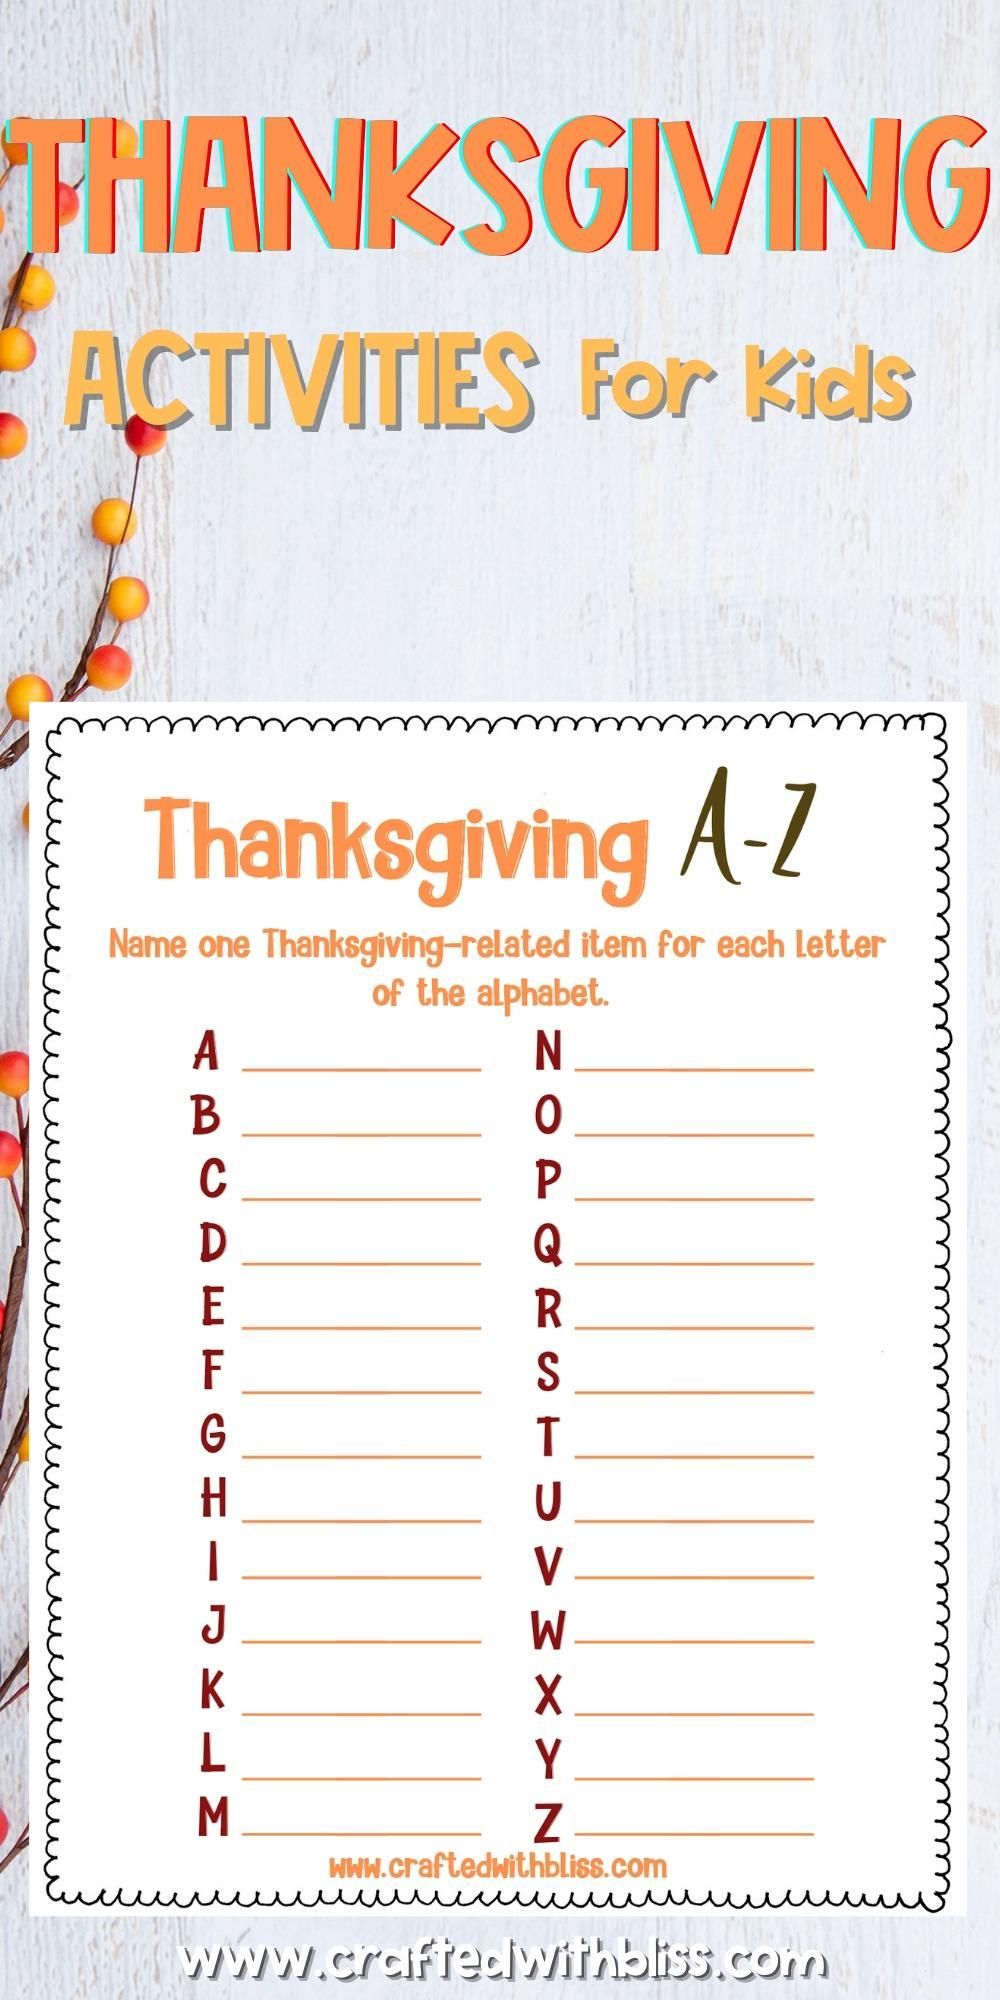 Thanksgiving Kids Activities, Kids Thanksgiving Game thanksgiving activities -   19 thanksgiving crafts for kids ideas